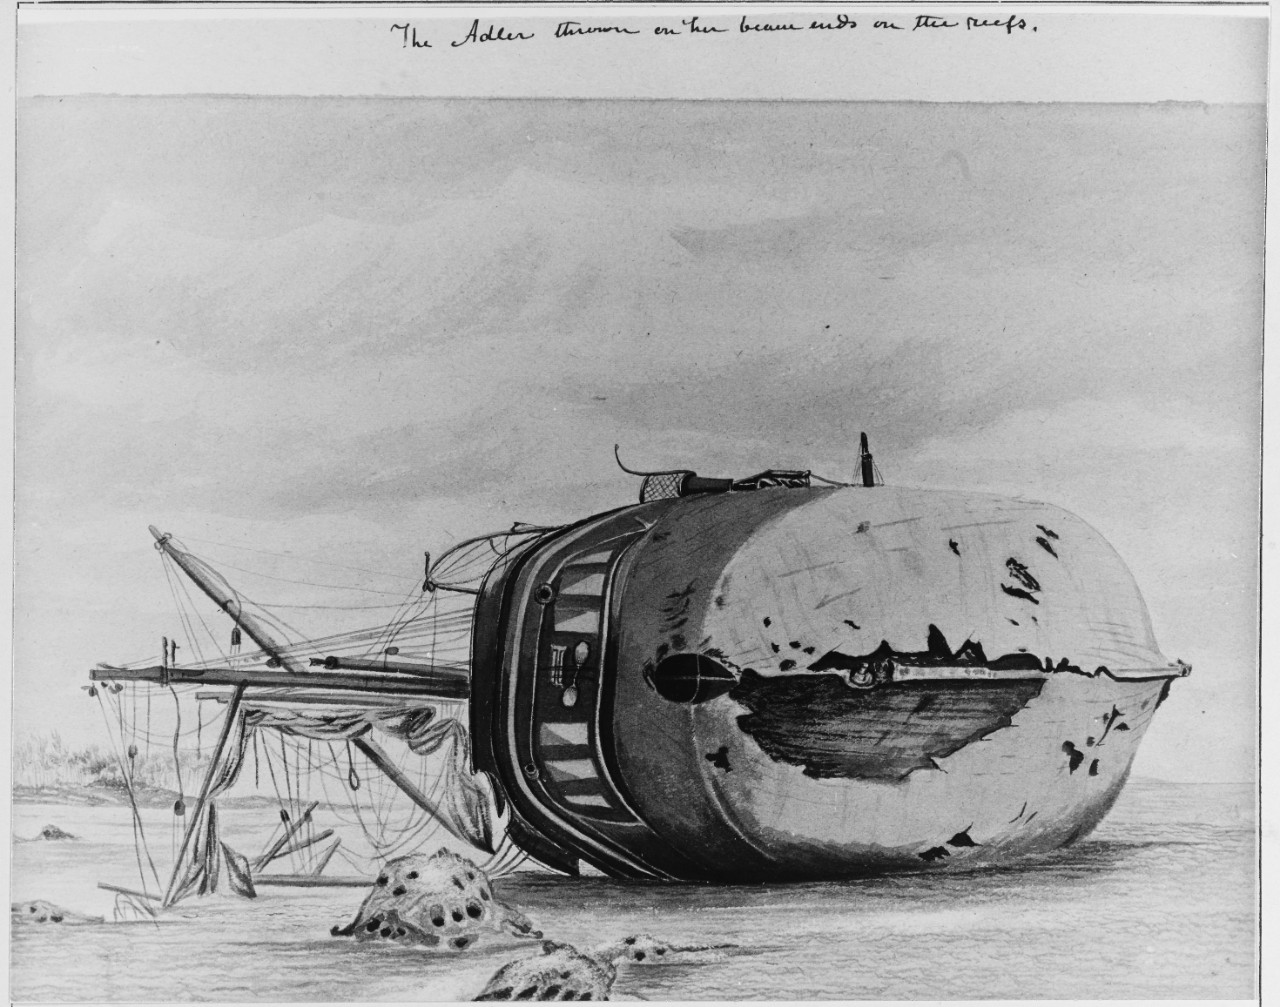 Photo #: NH 42138  Hurricane at Apia, Samoa, 15-16 March 1889